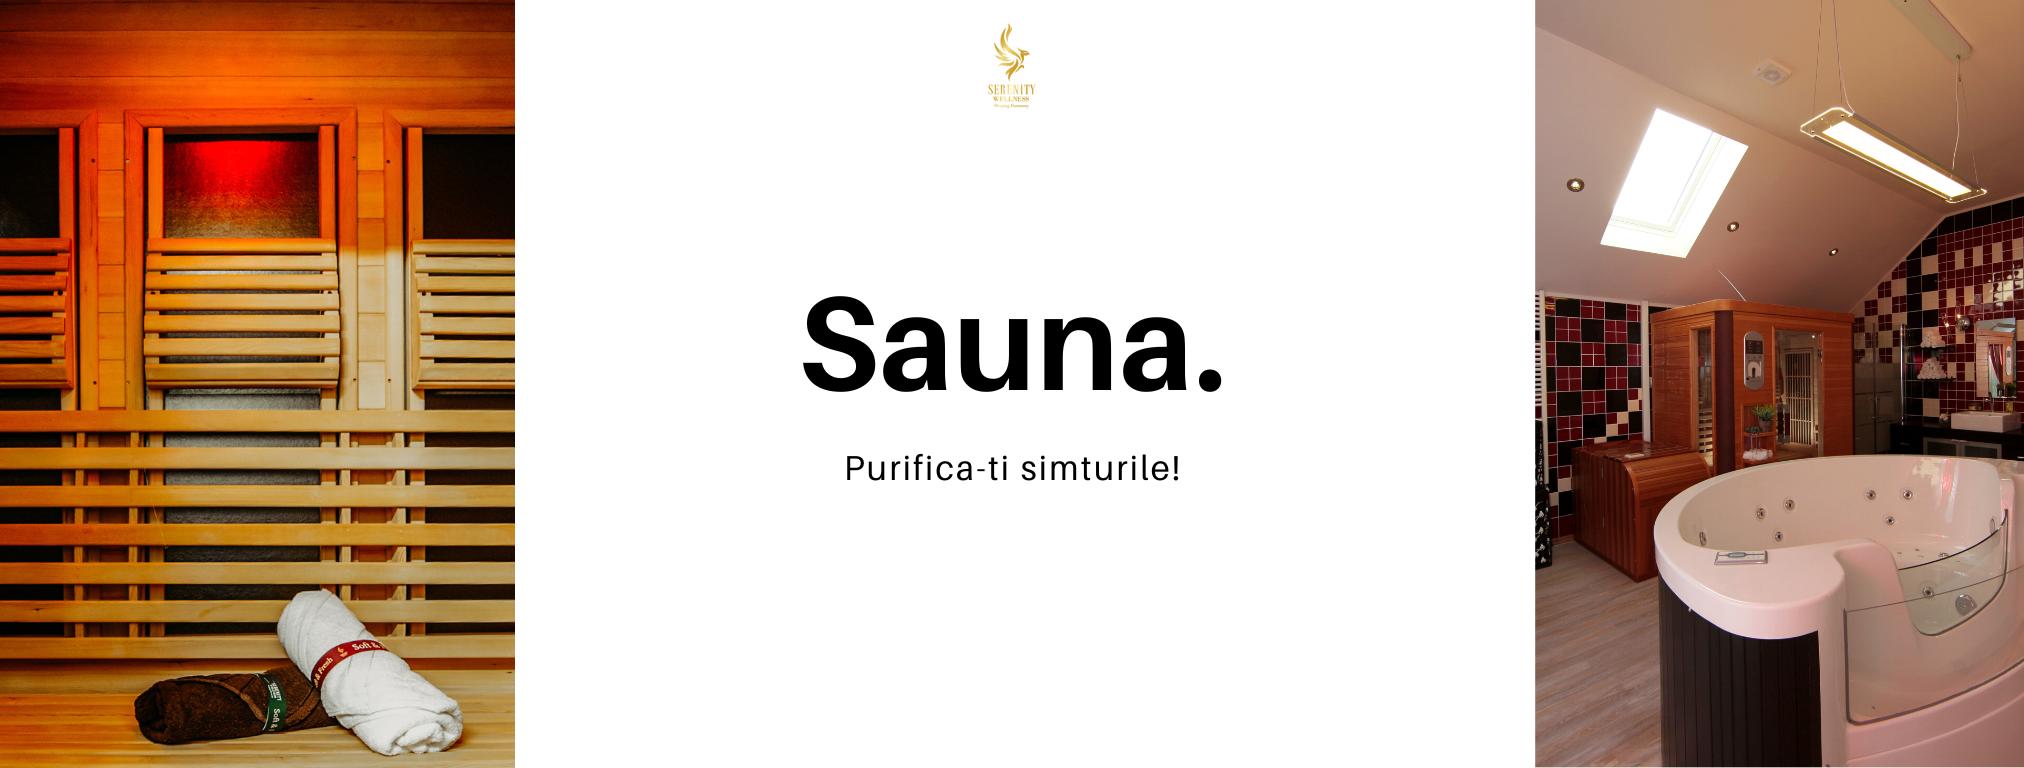 Sauna-Serenity Wellness Mogosoaia